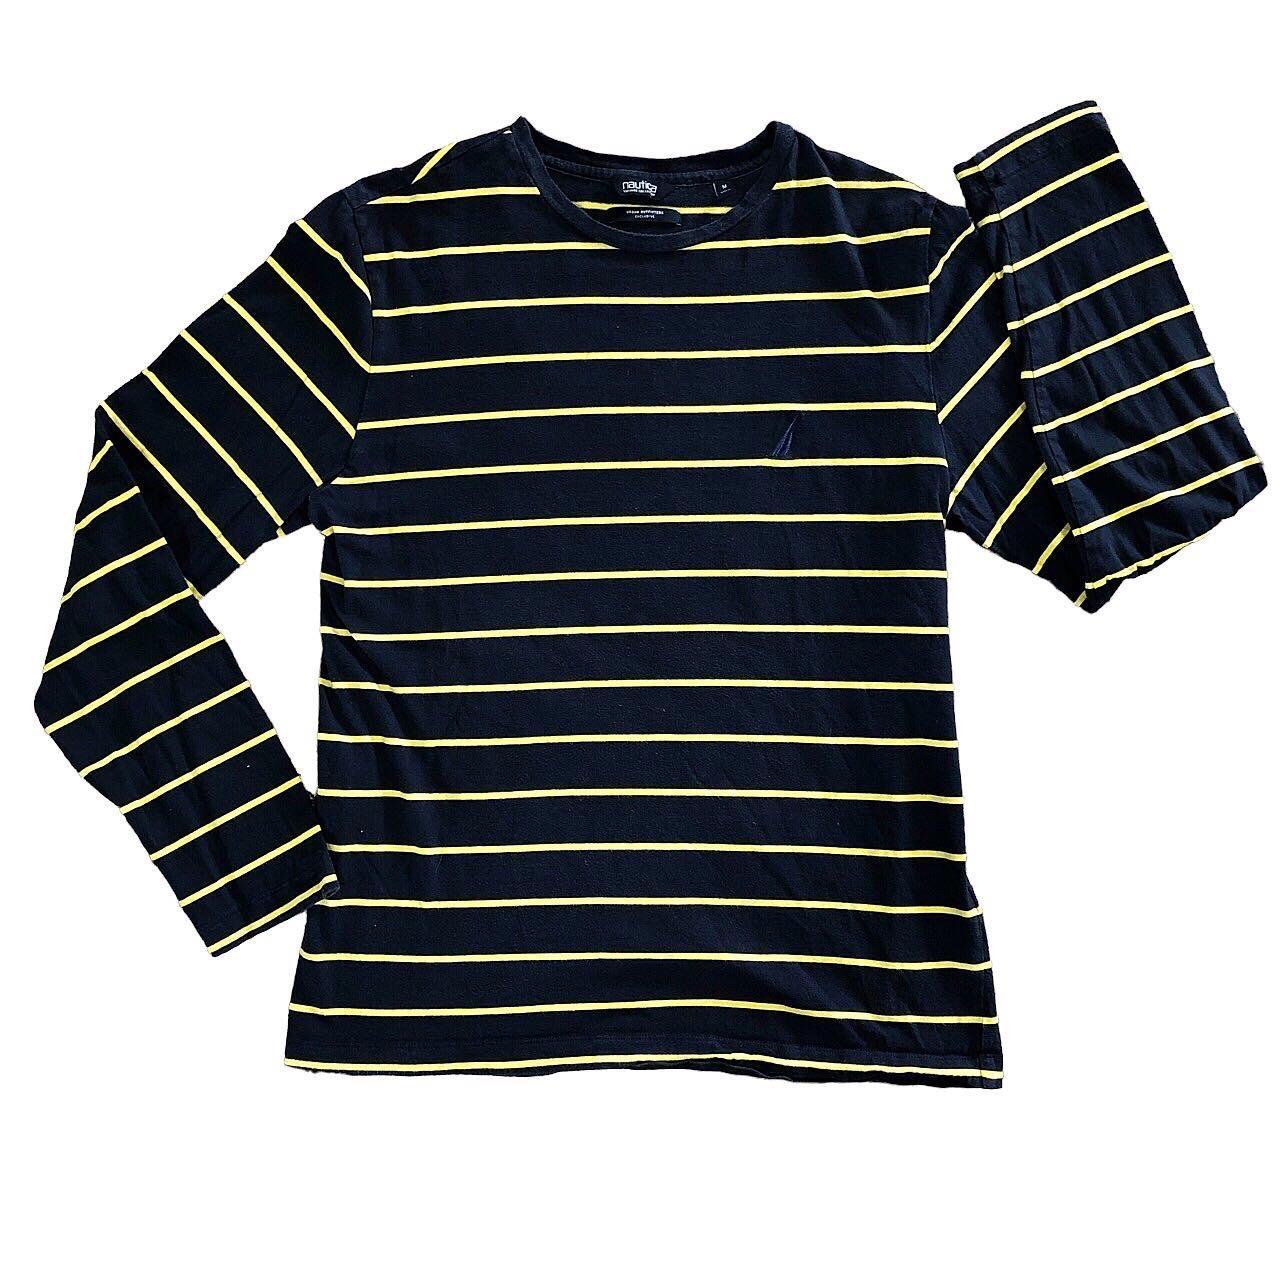 Long T-Shirt - Black – Nautica